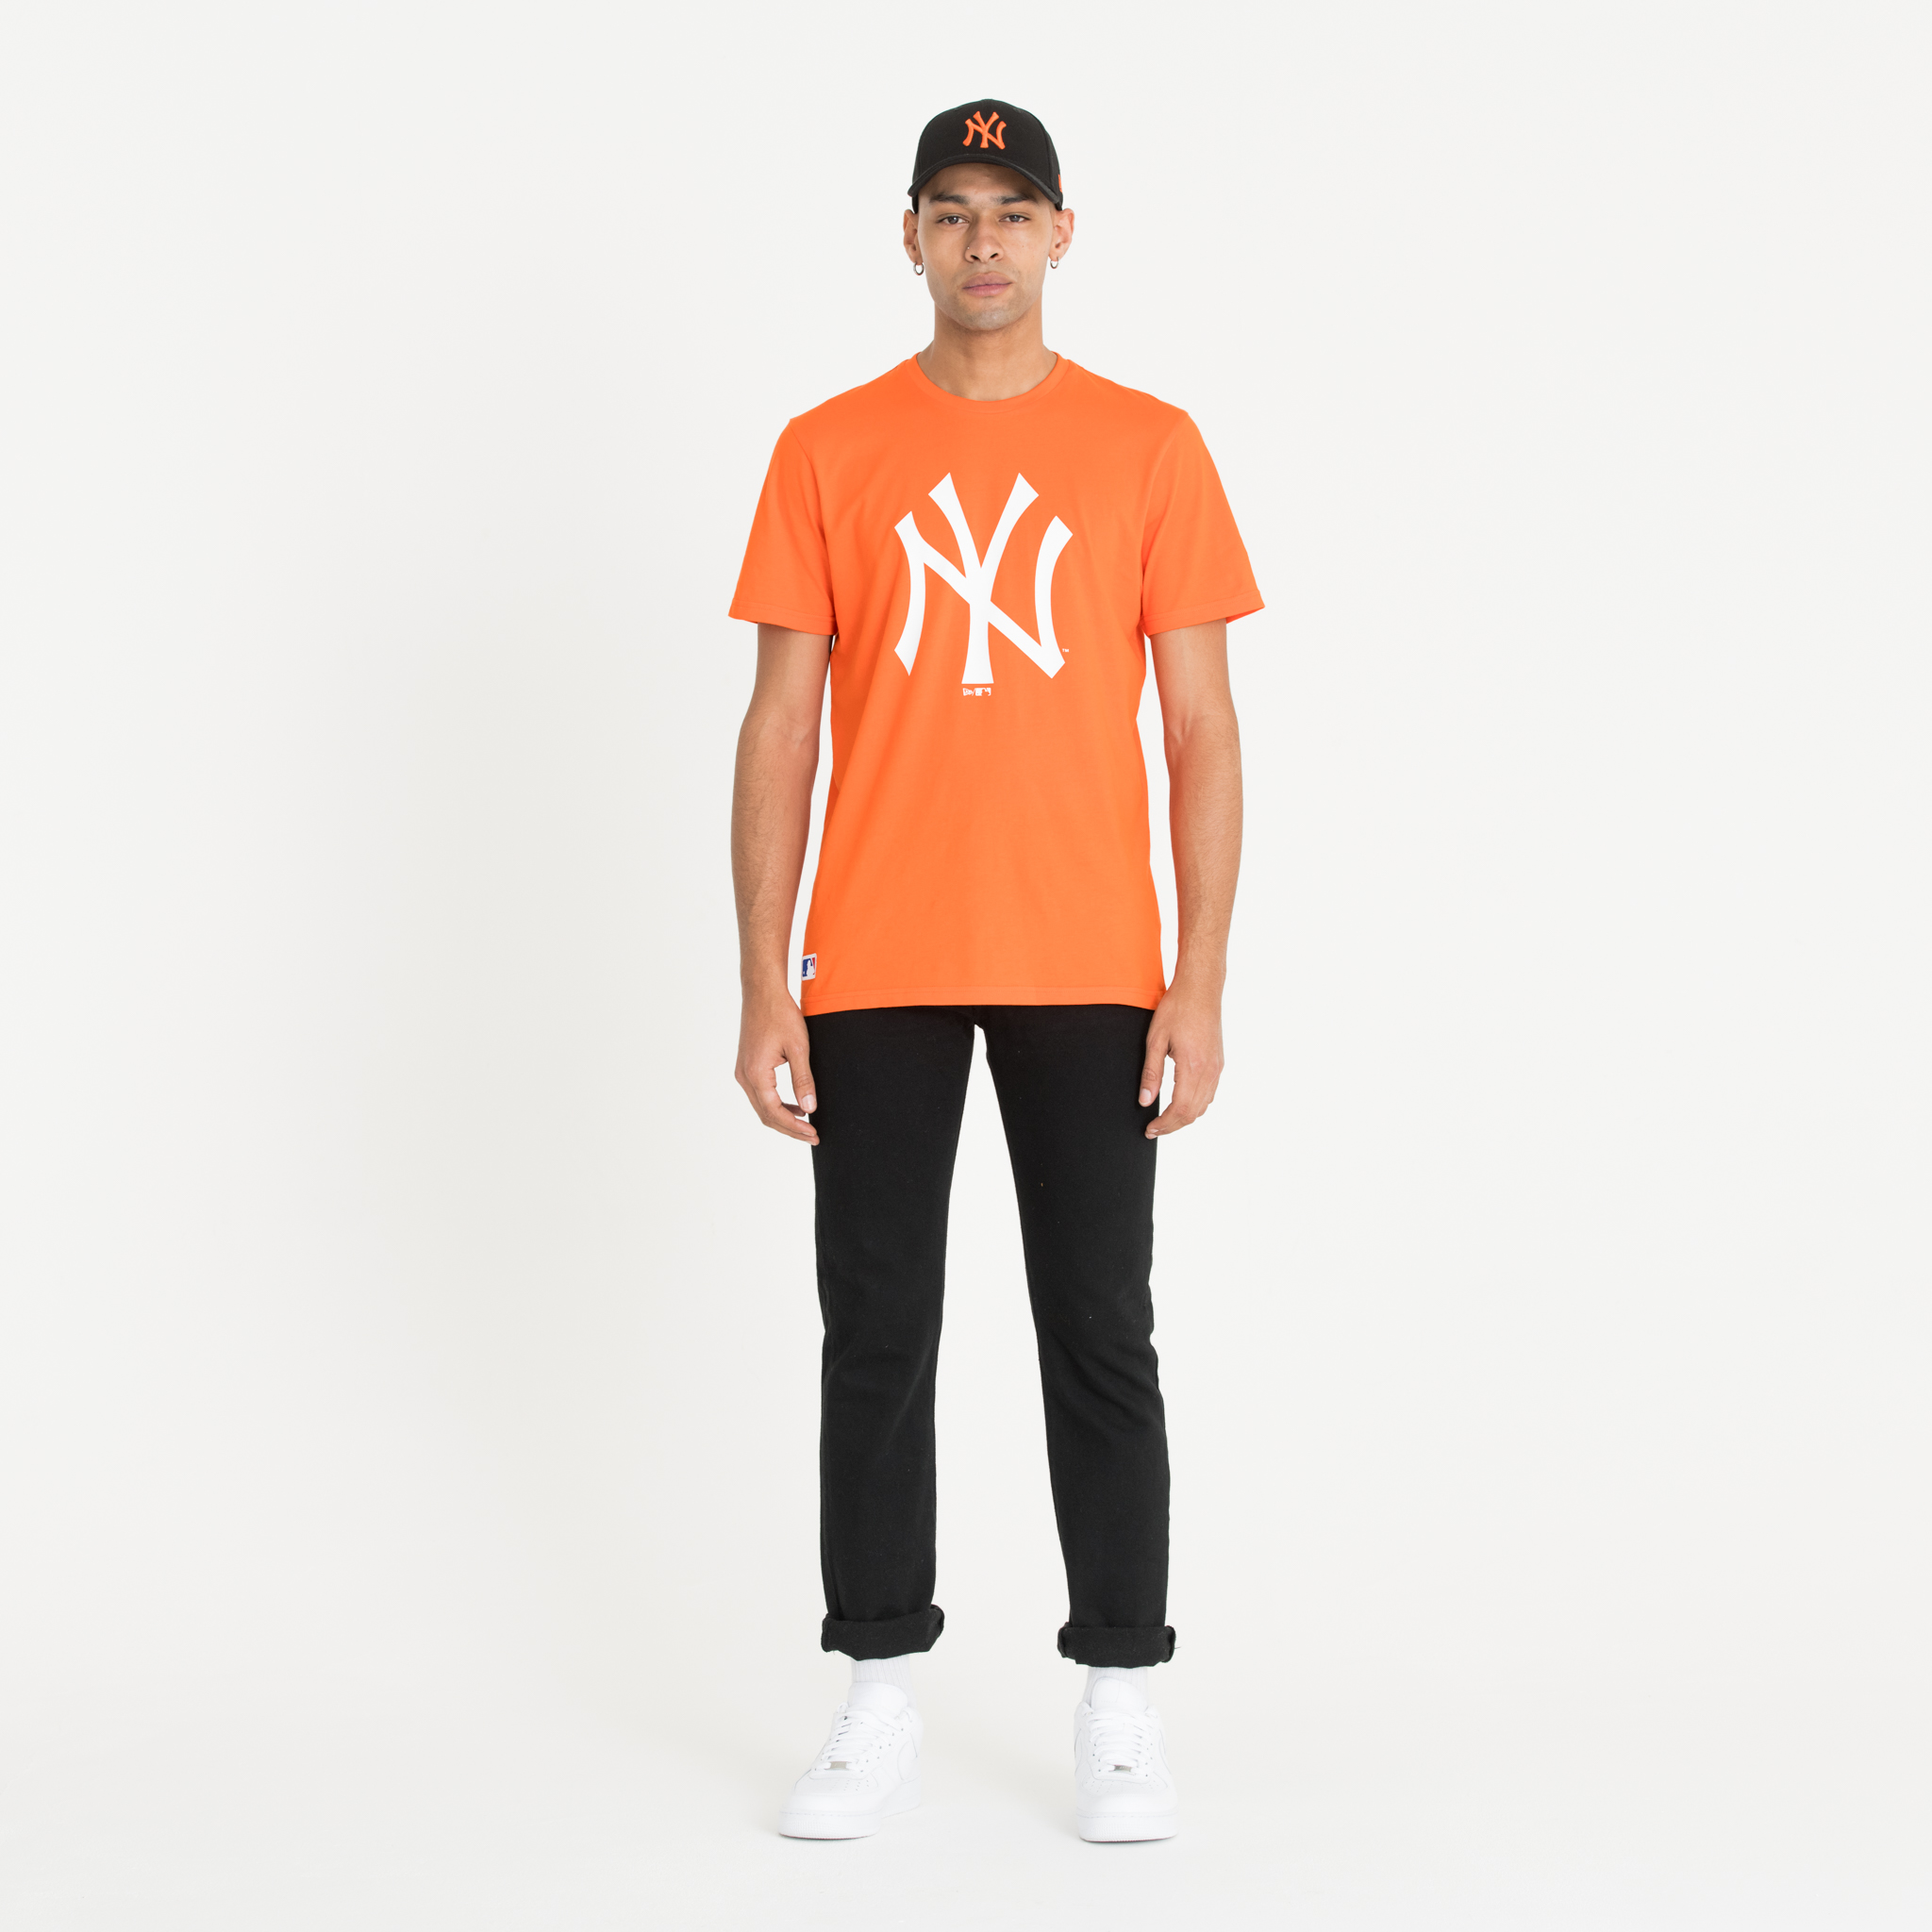 Camiseta New York Yankees, naranja